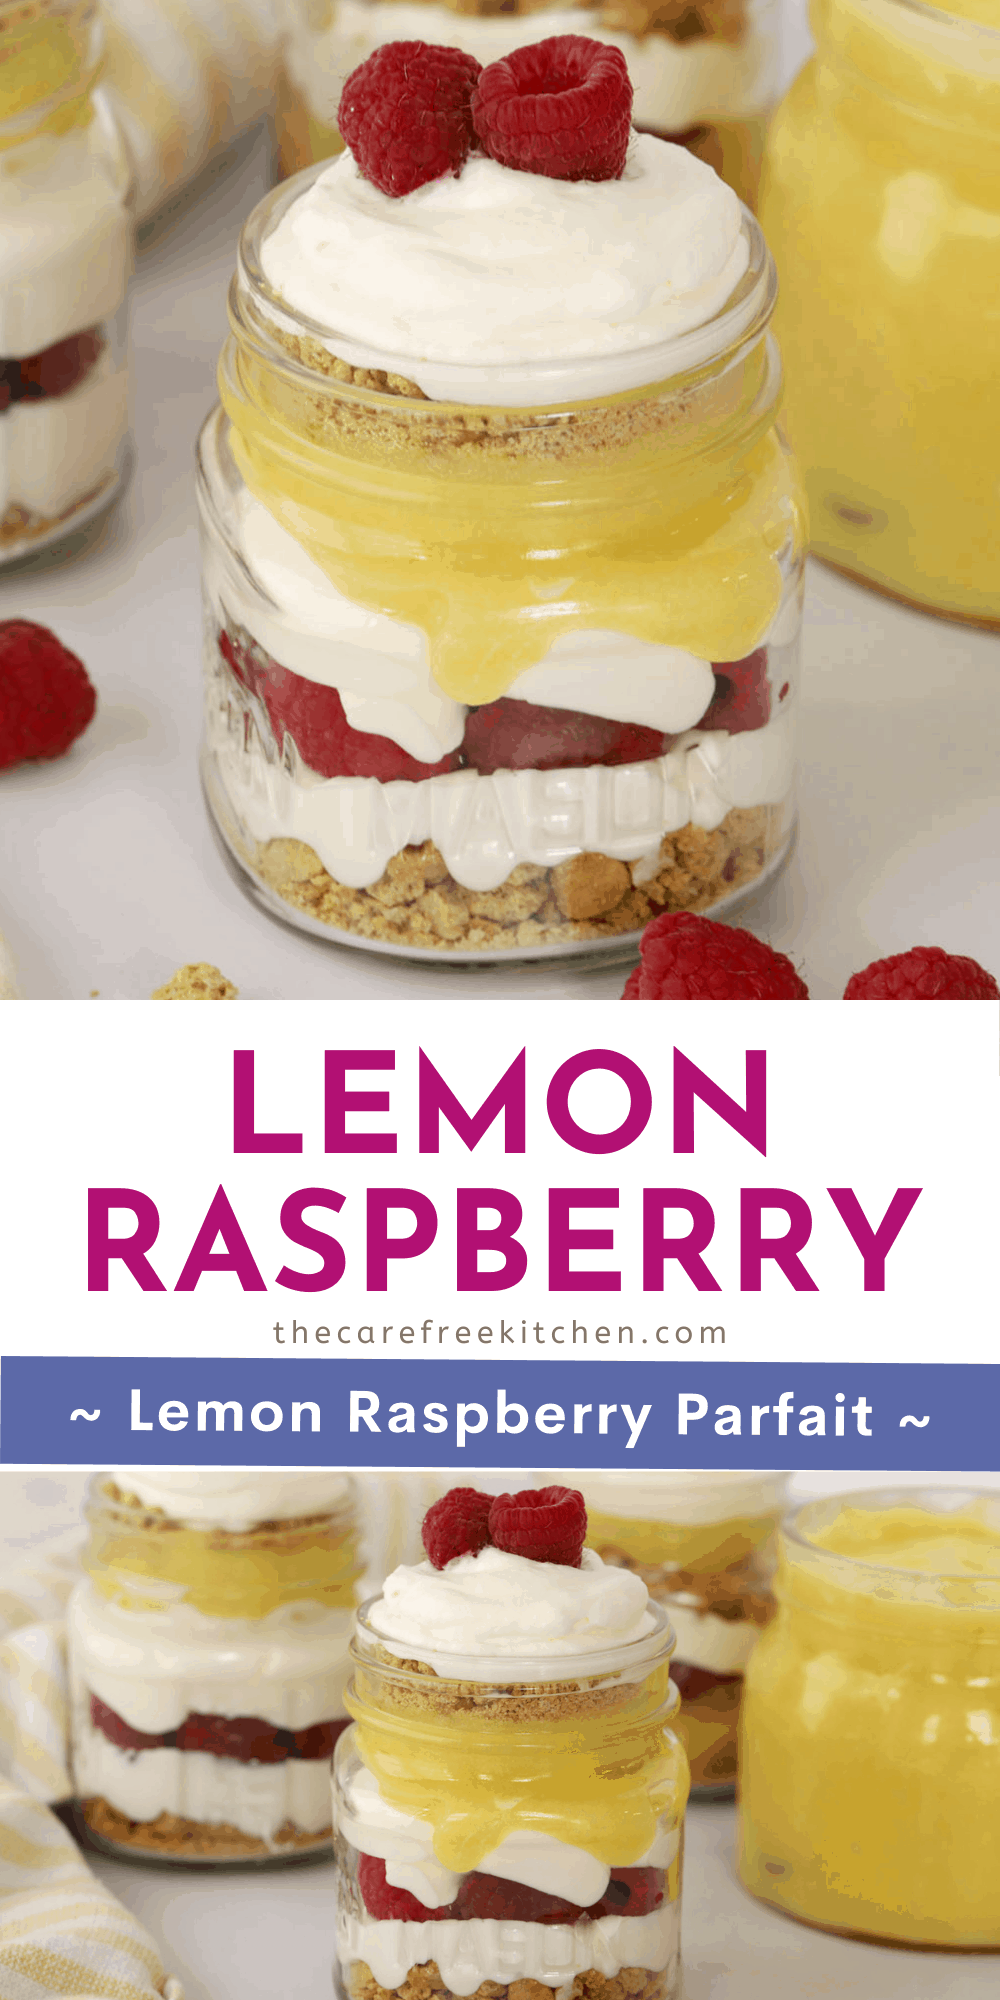 how to make homemade lemon parfait with raspberries recipe.